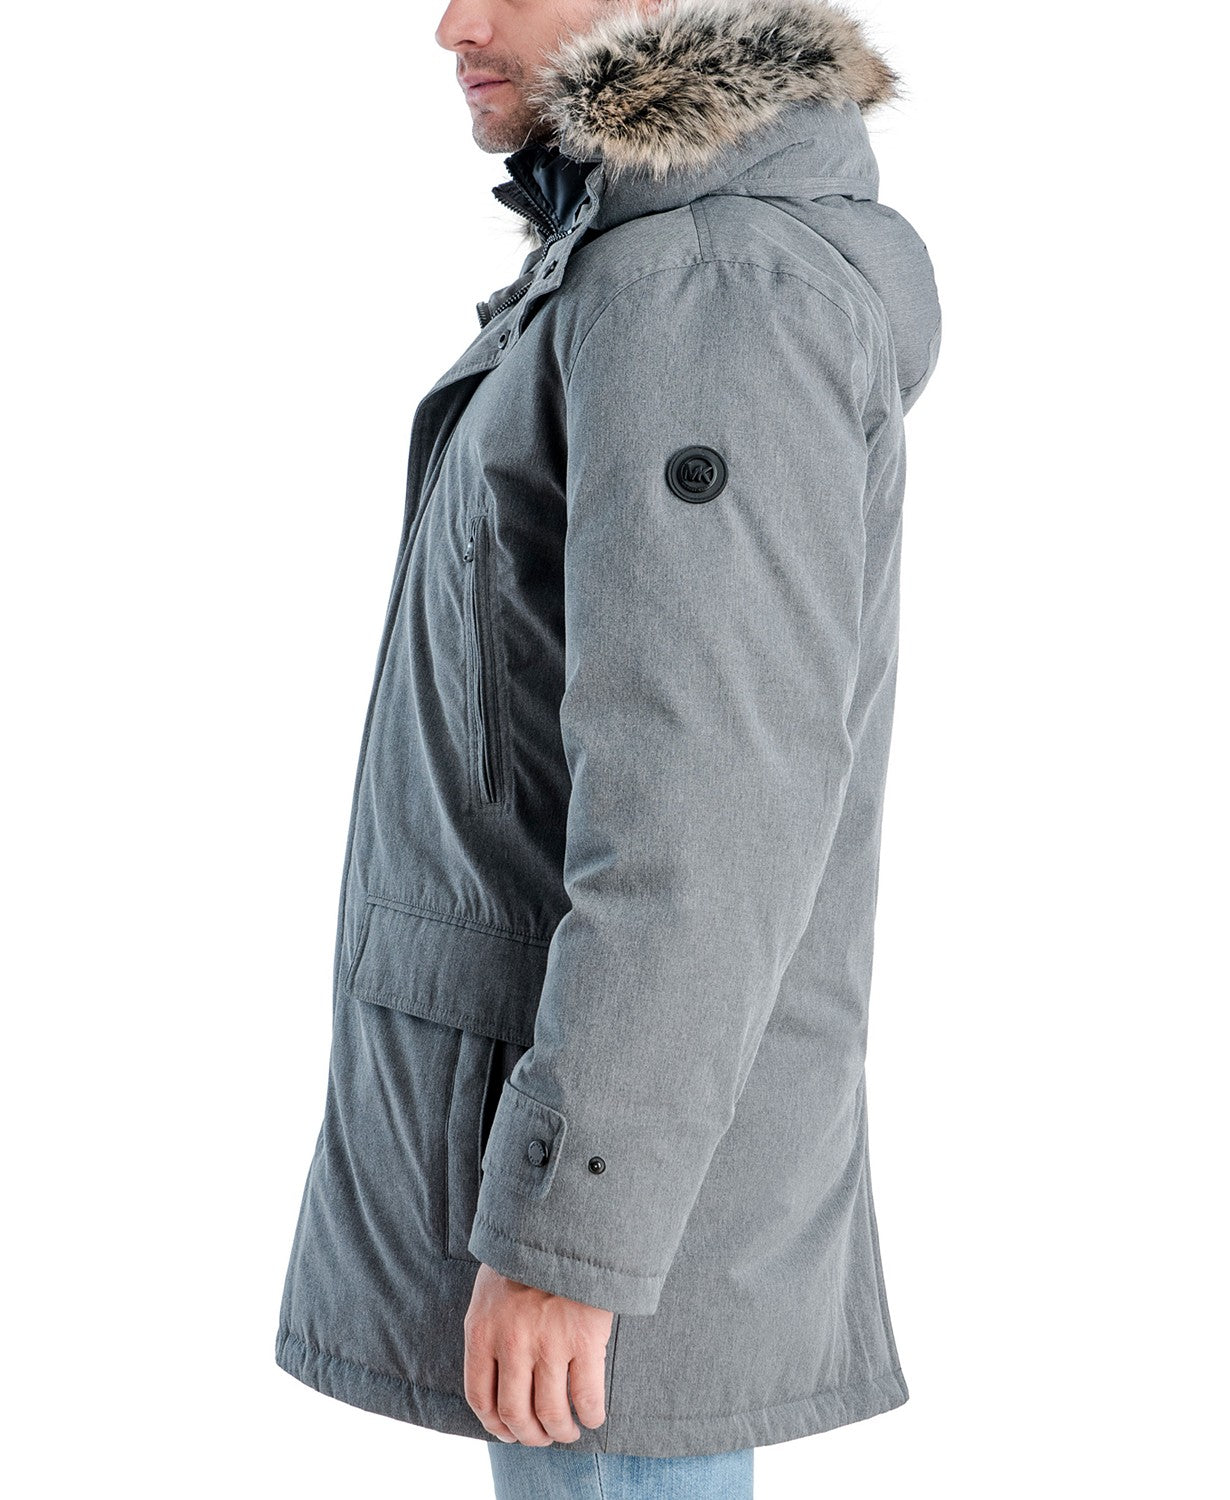 Michael Kors Men's Hooded Bib Snorkel Parka Coat Large Grey